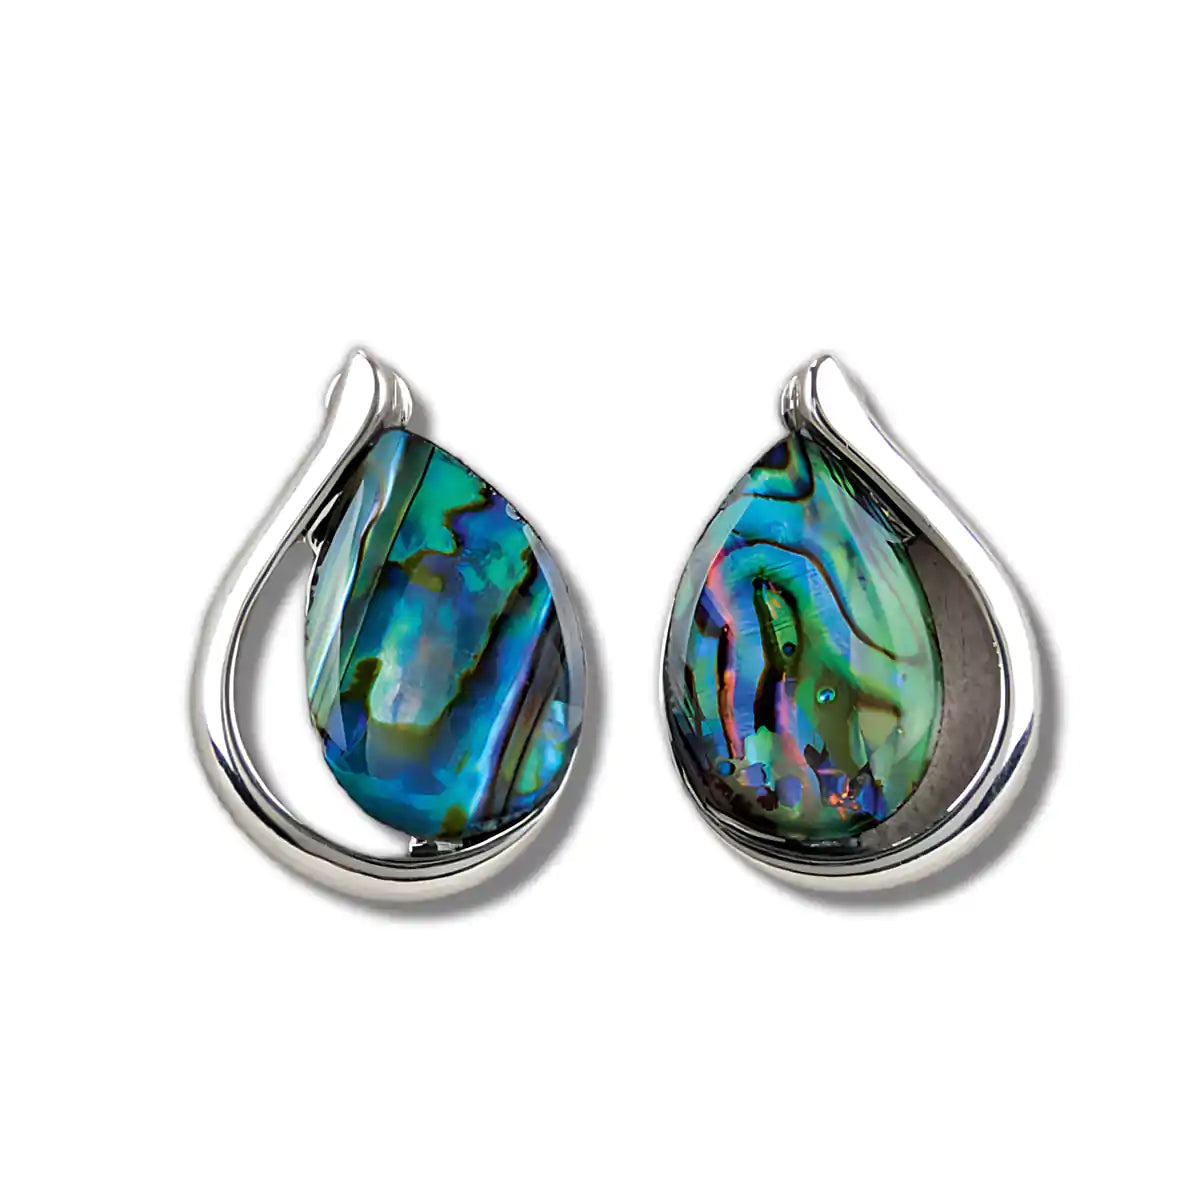 Glacier pearle moonlight earrings